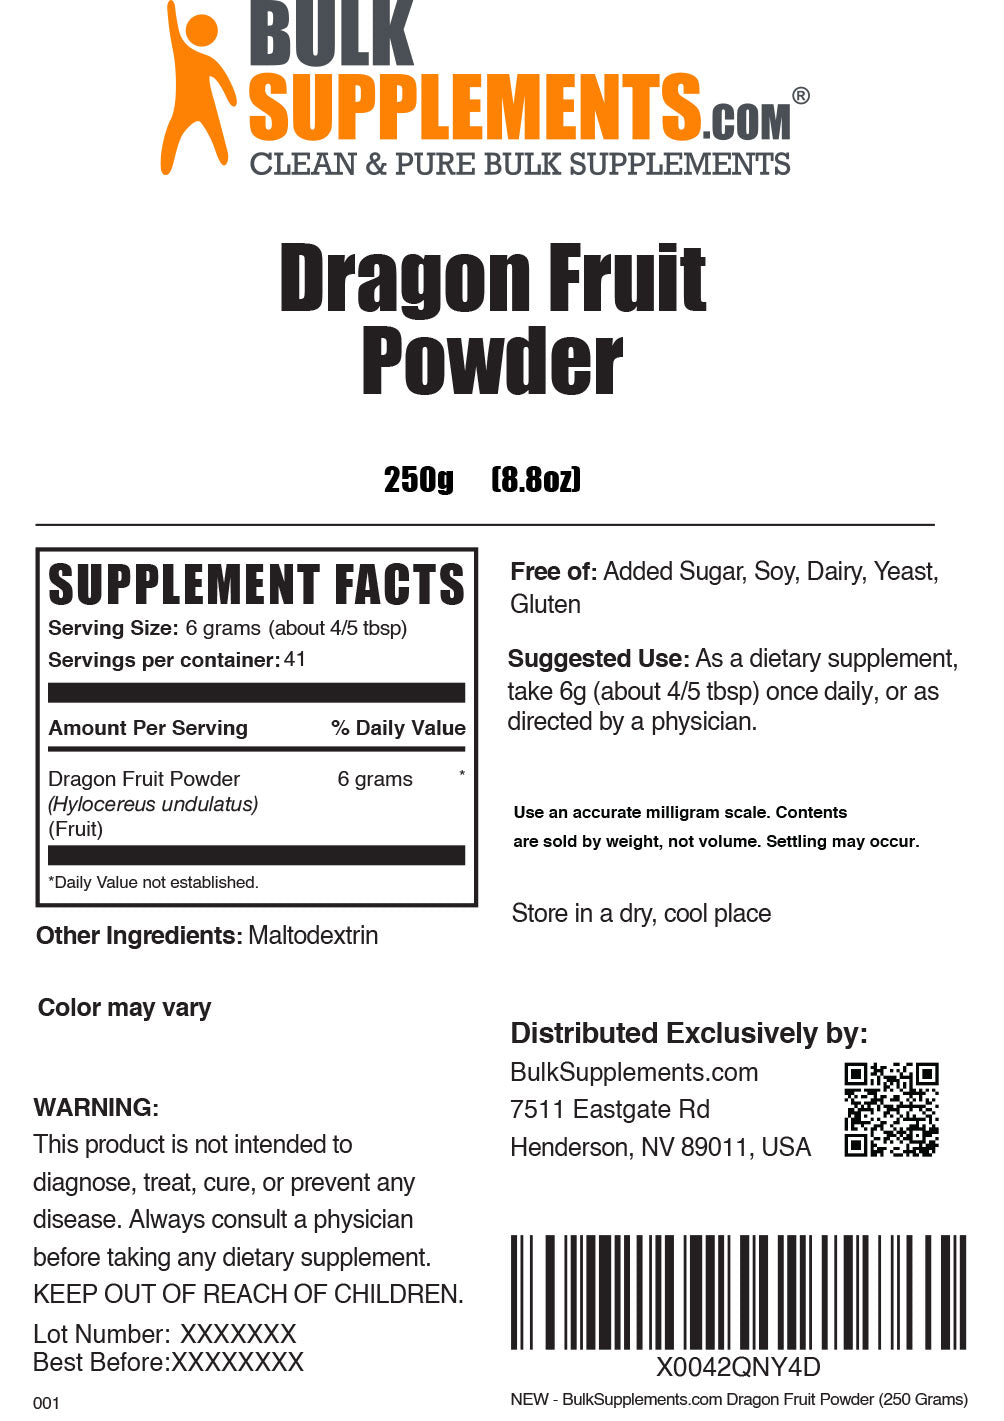 Dragon Fruit Powder label 250g